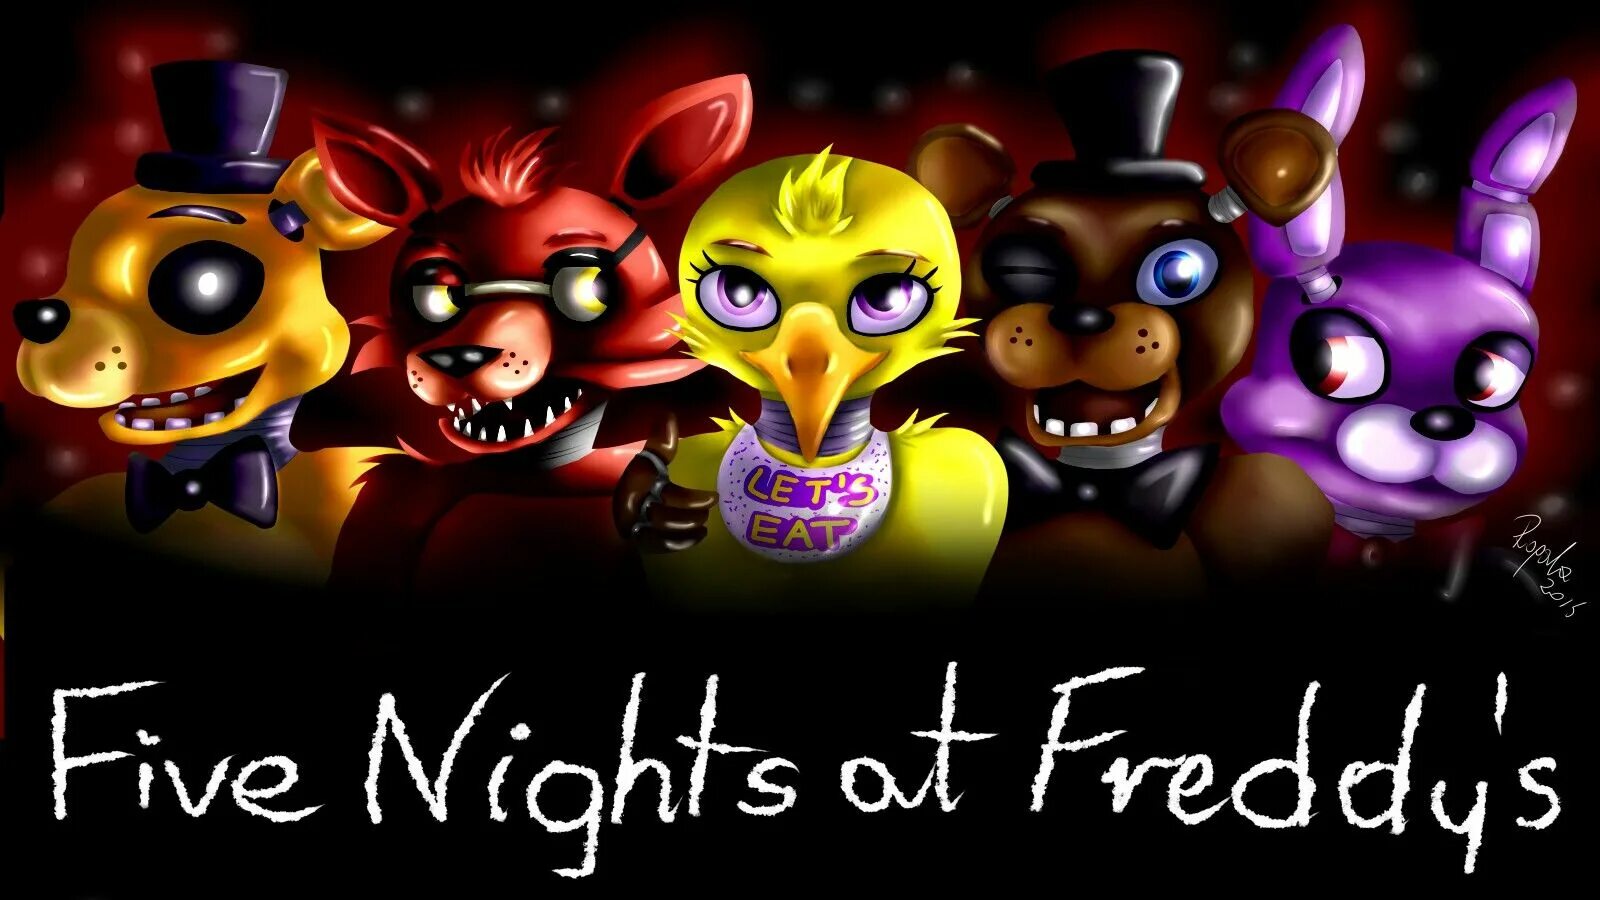 Фиве Нигхт АТ Фредди. ФНАФ 1. Файф Найт Фредди. Five Nights at Freddy's Фредди. Новая игра фнаф